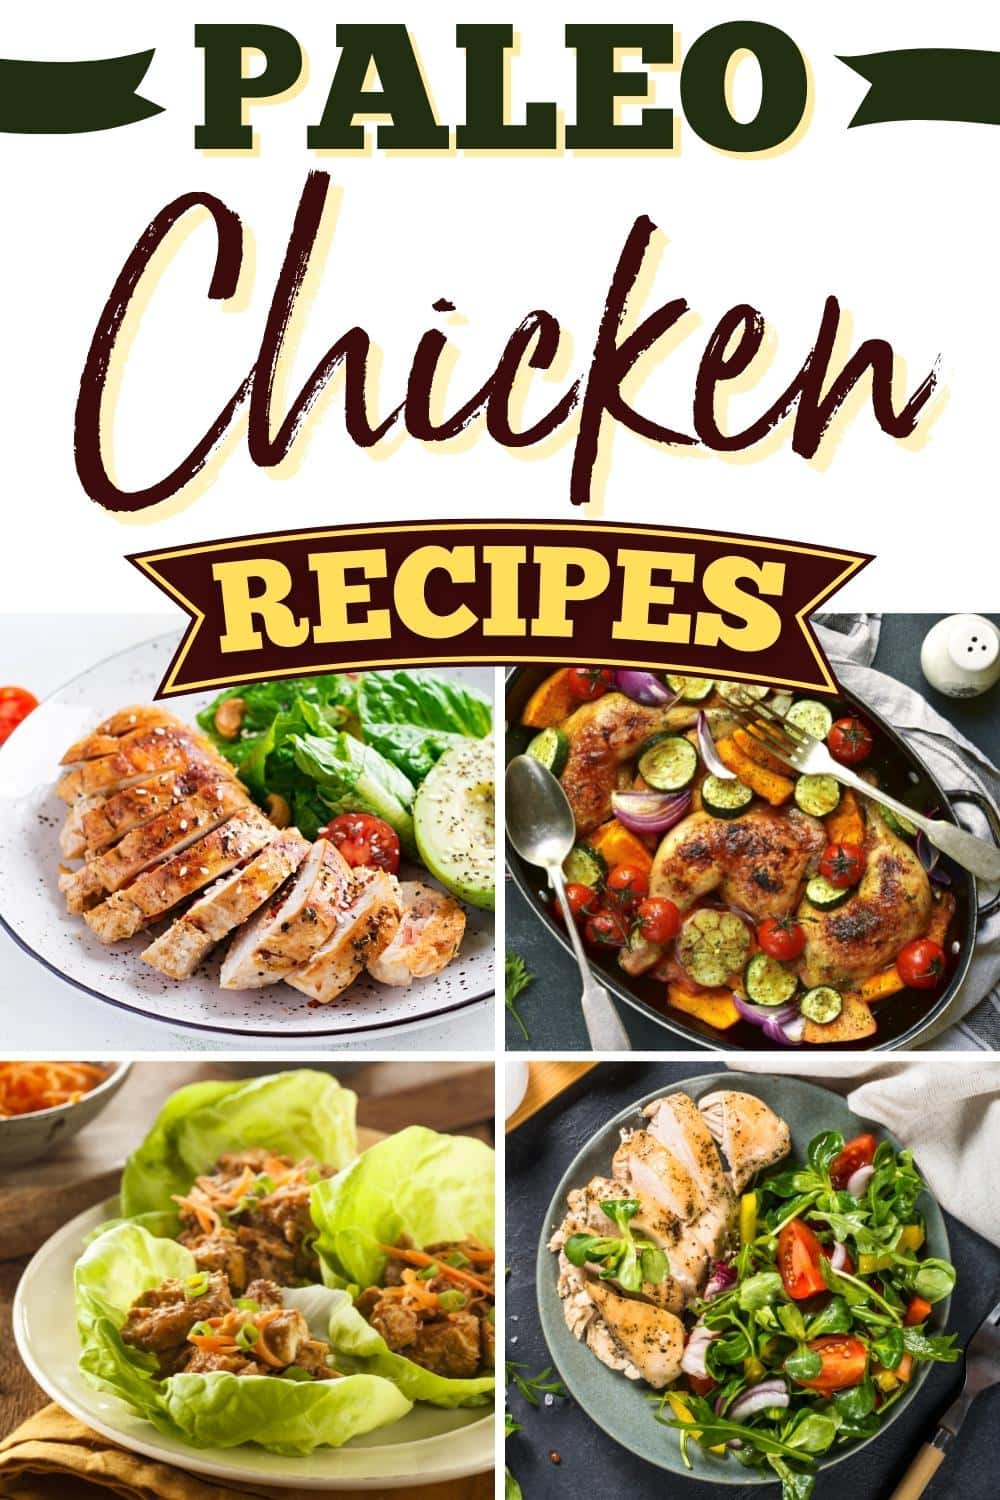 30 Easy Paleo Chicken Recipes to Make for Dinner - Insanely Good